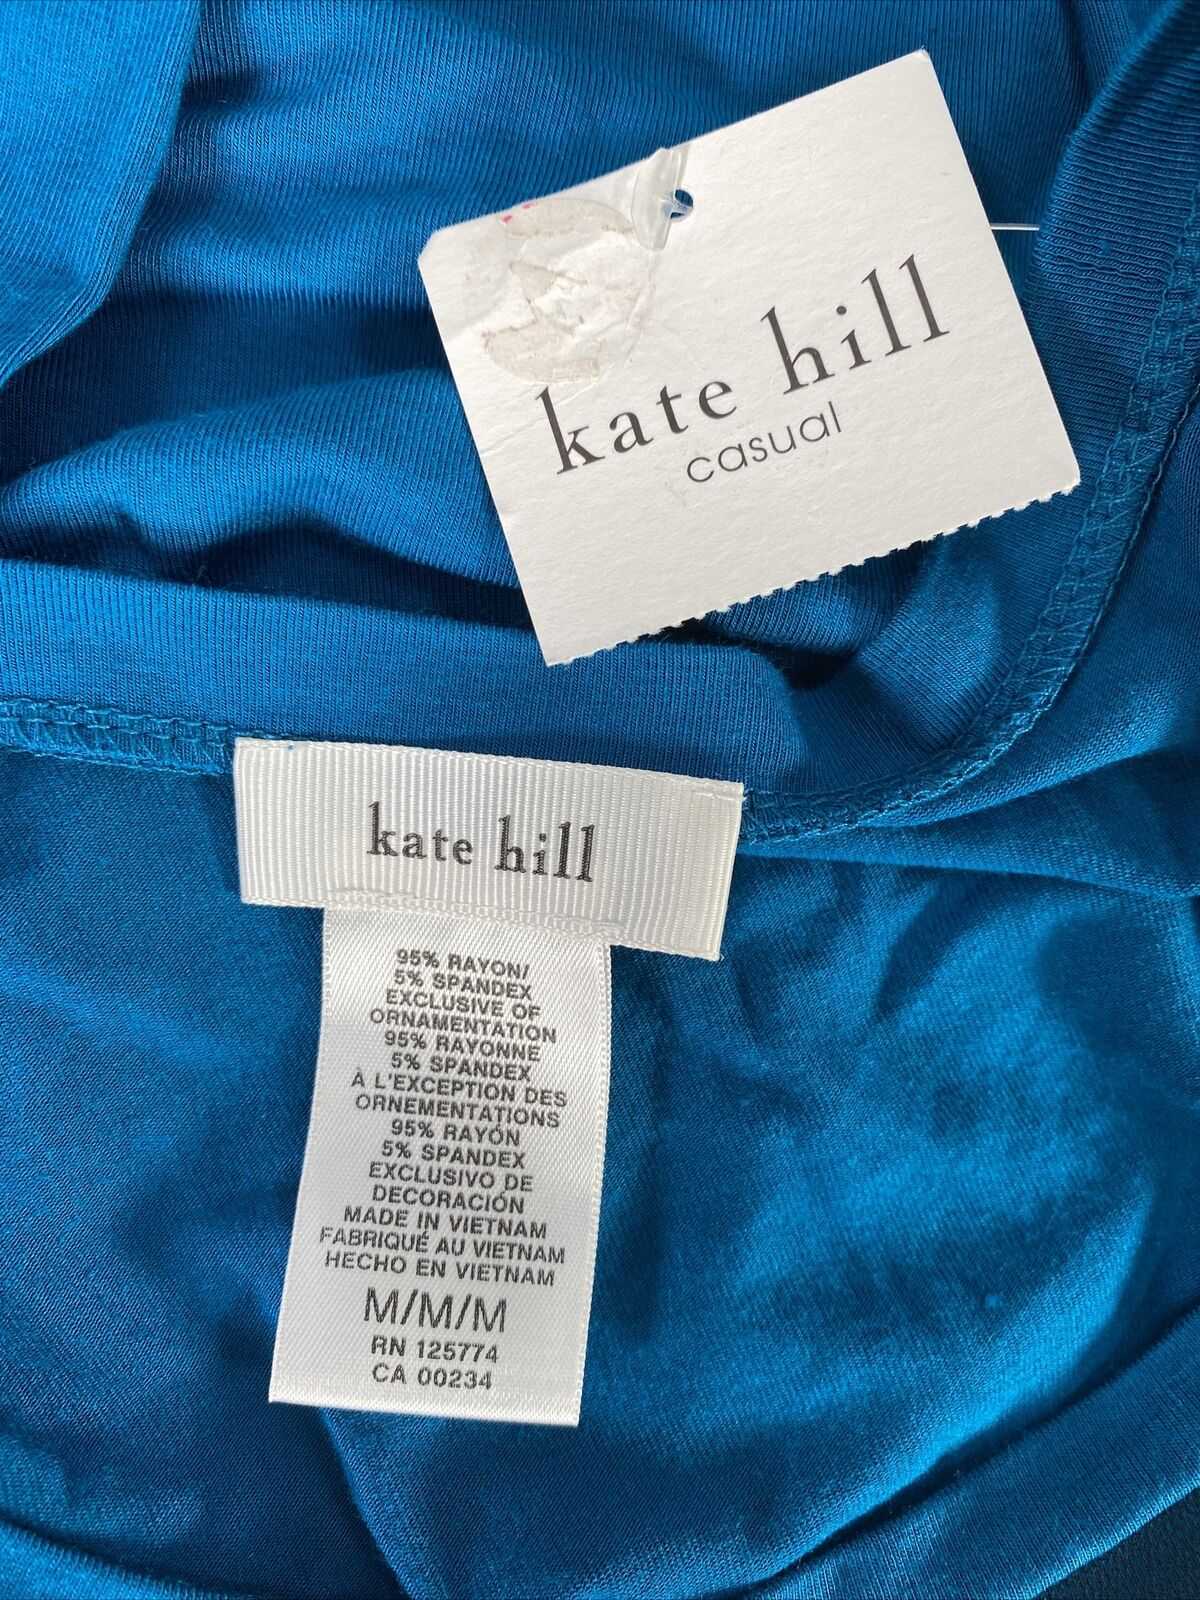 NUEVO Blusa de manga larga con cuello de diamantes de imitación azul de Kate Hill para mujer - M